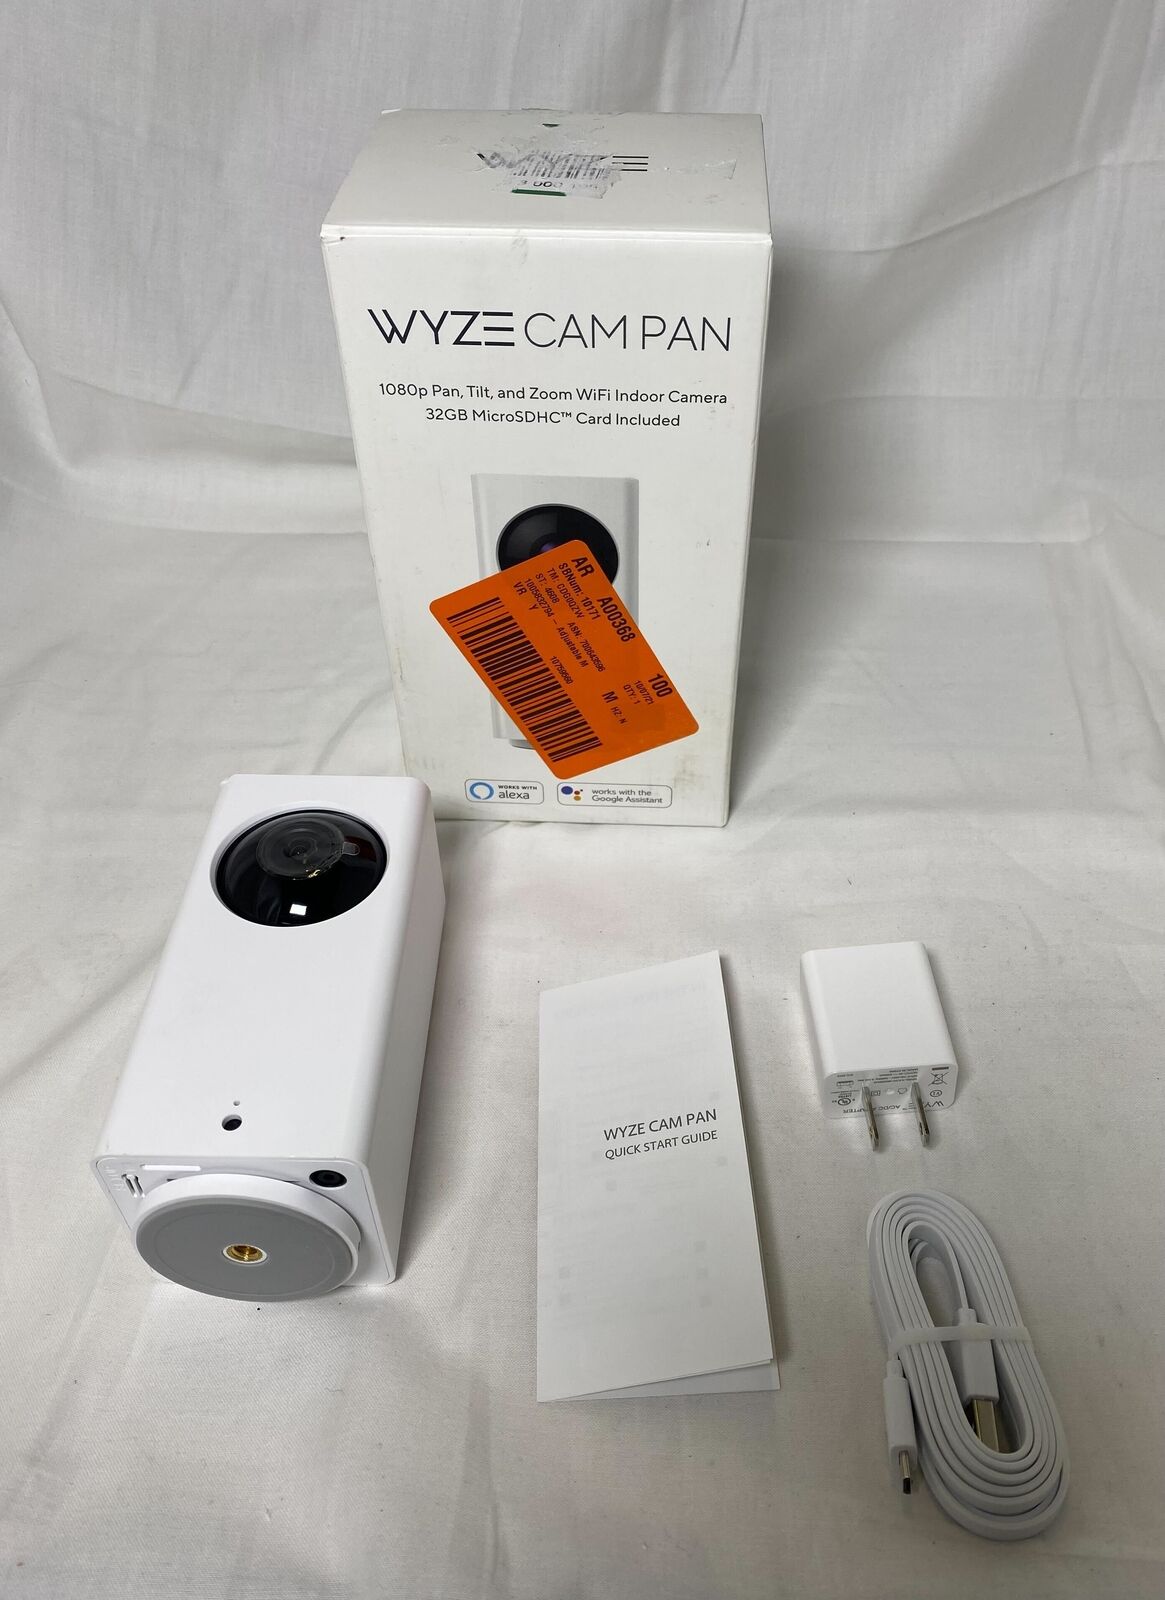 Wyze Cam Pan 1080p Pan/tilt/zoom Indoor Smart Home Camera - Missing Microsdhc